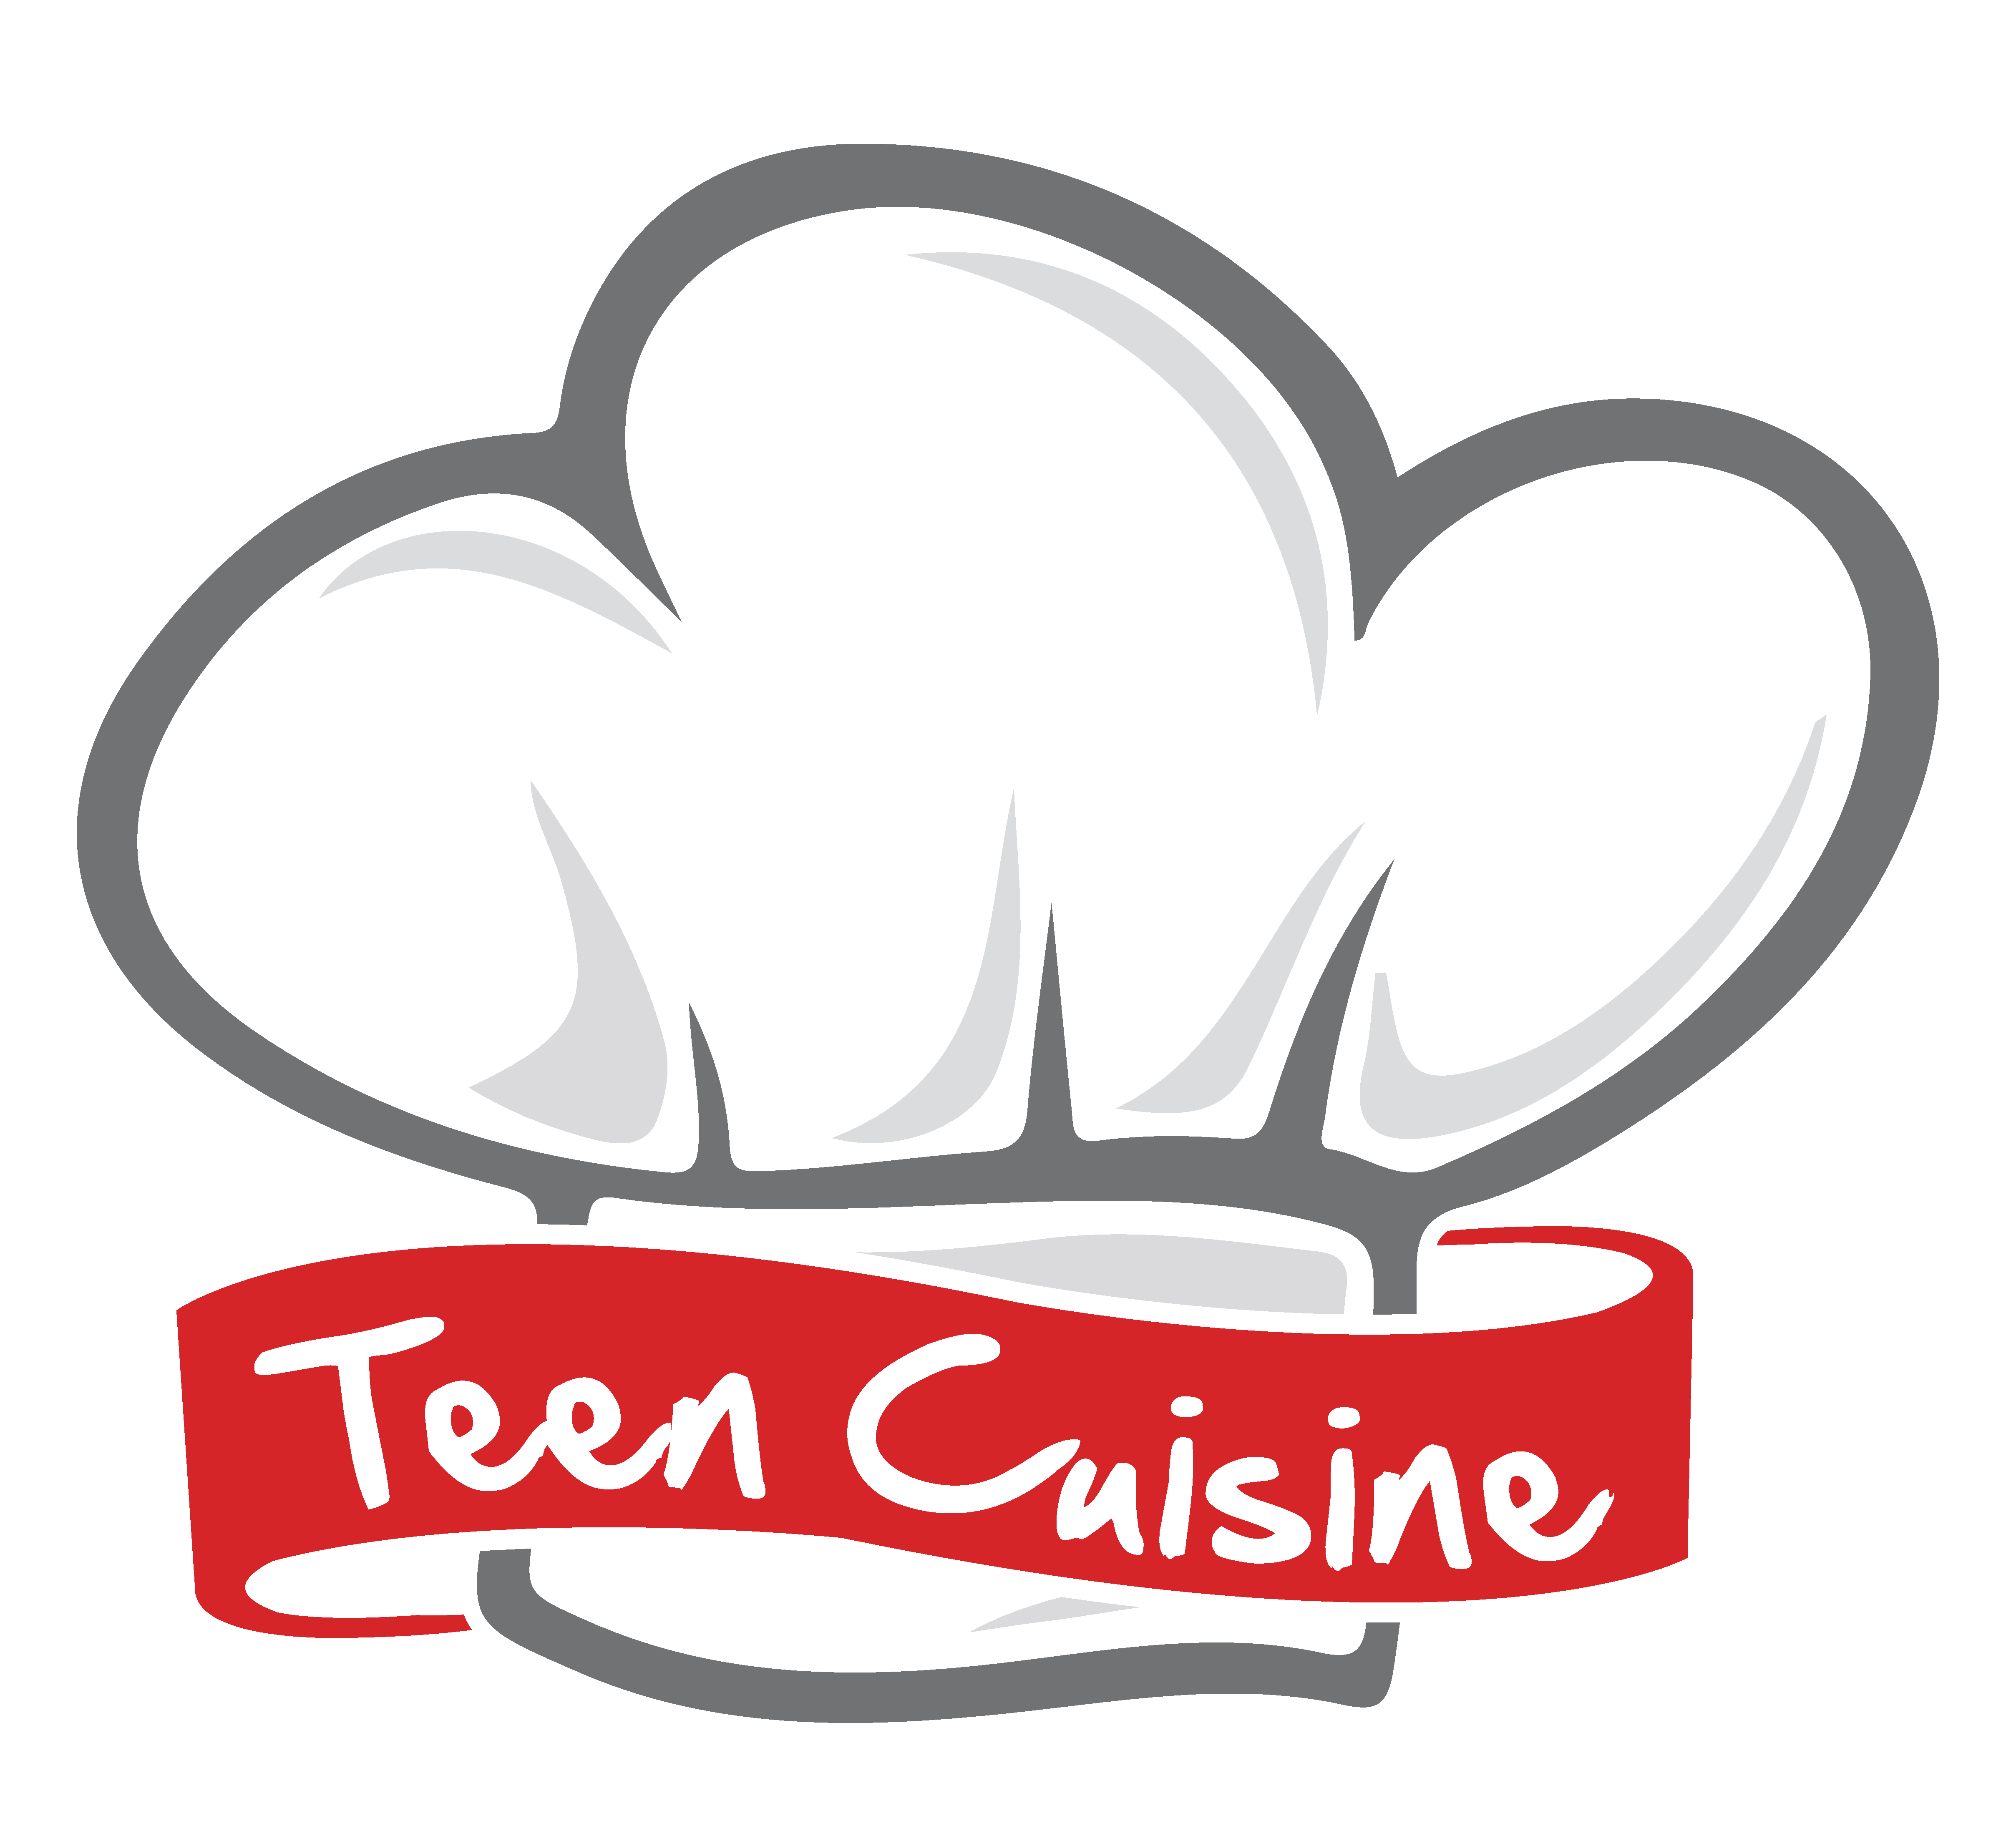 Cuisine Logo - Teen Cuisine / December 2017 Recipe